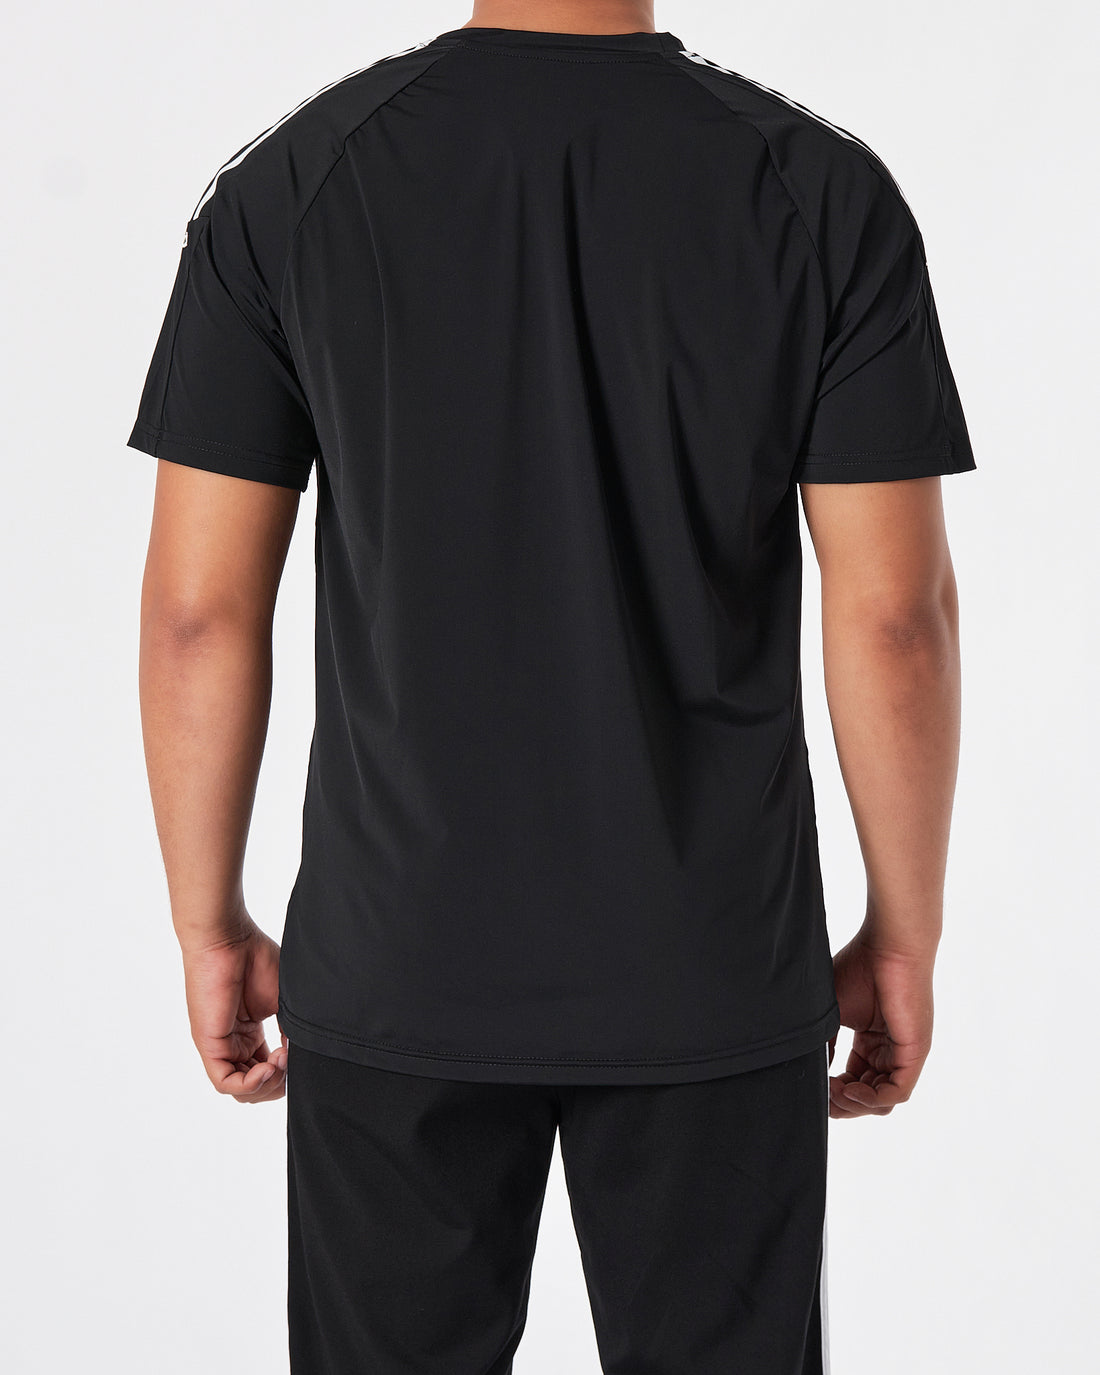 ADI Striped Men Black Sport T-Shirt 13.90